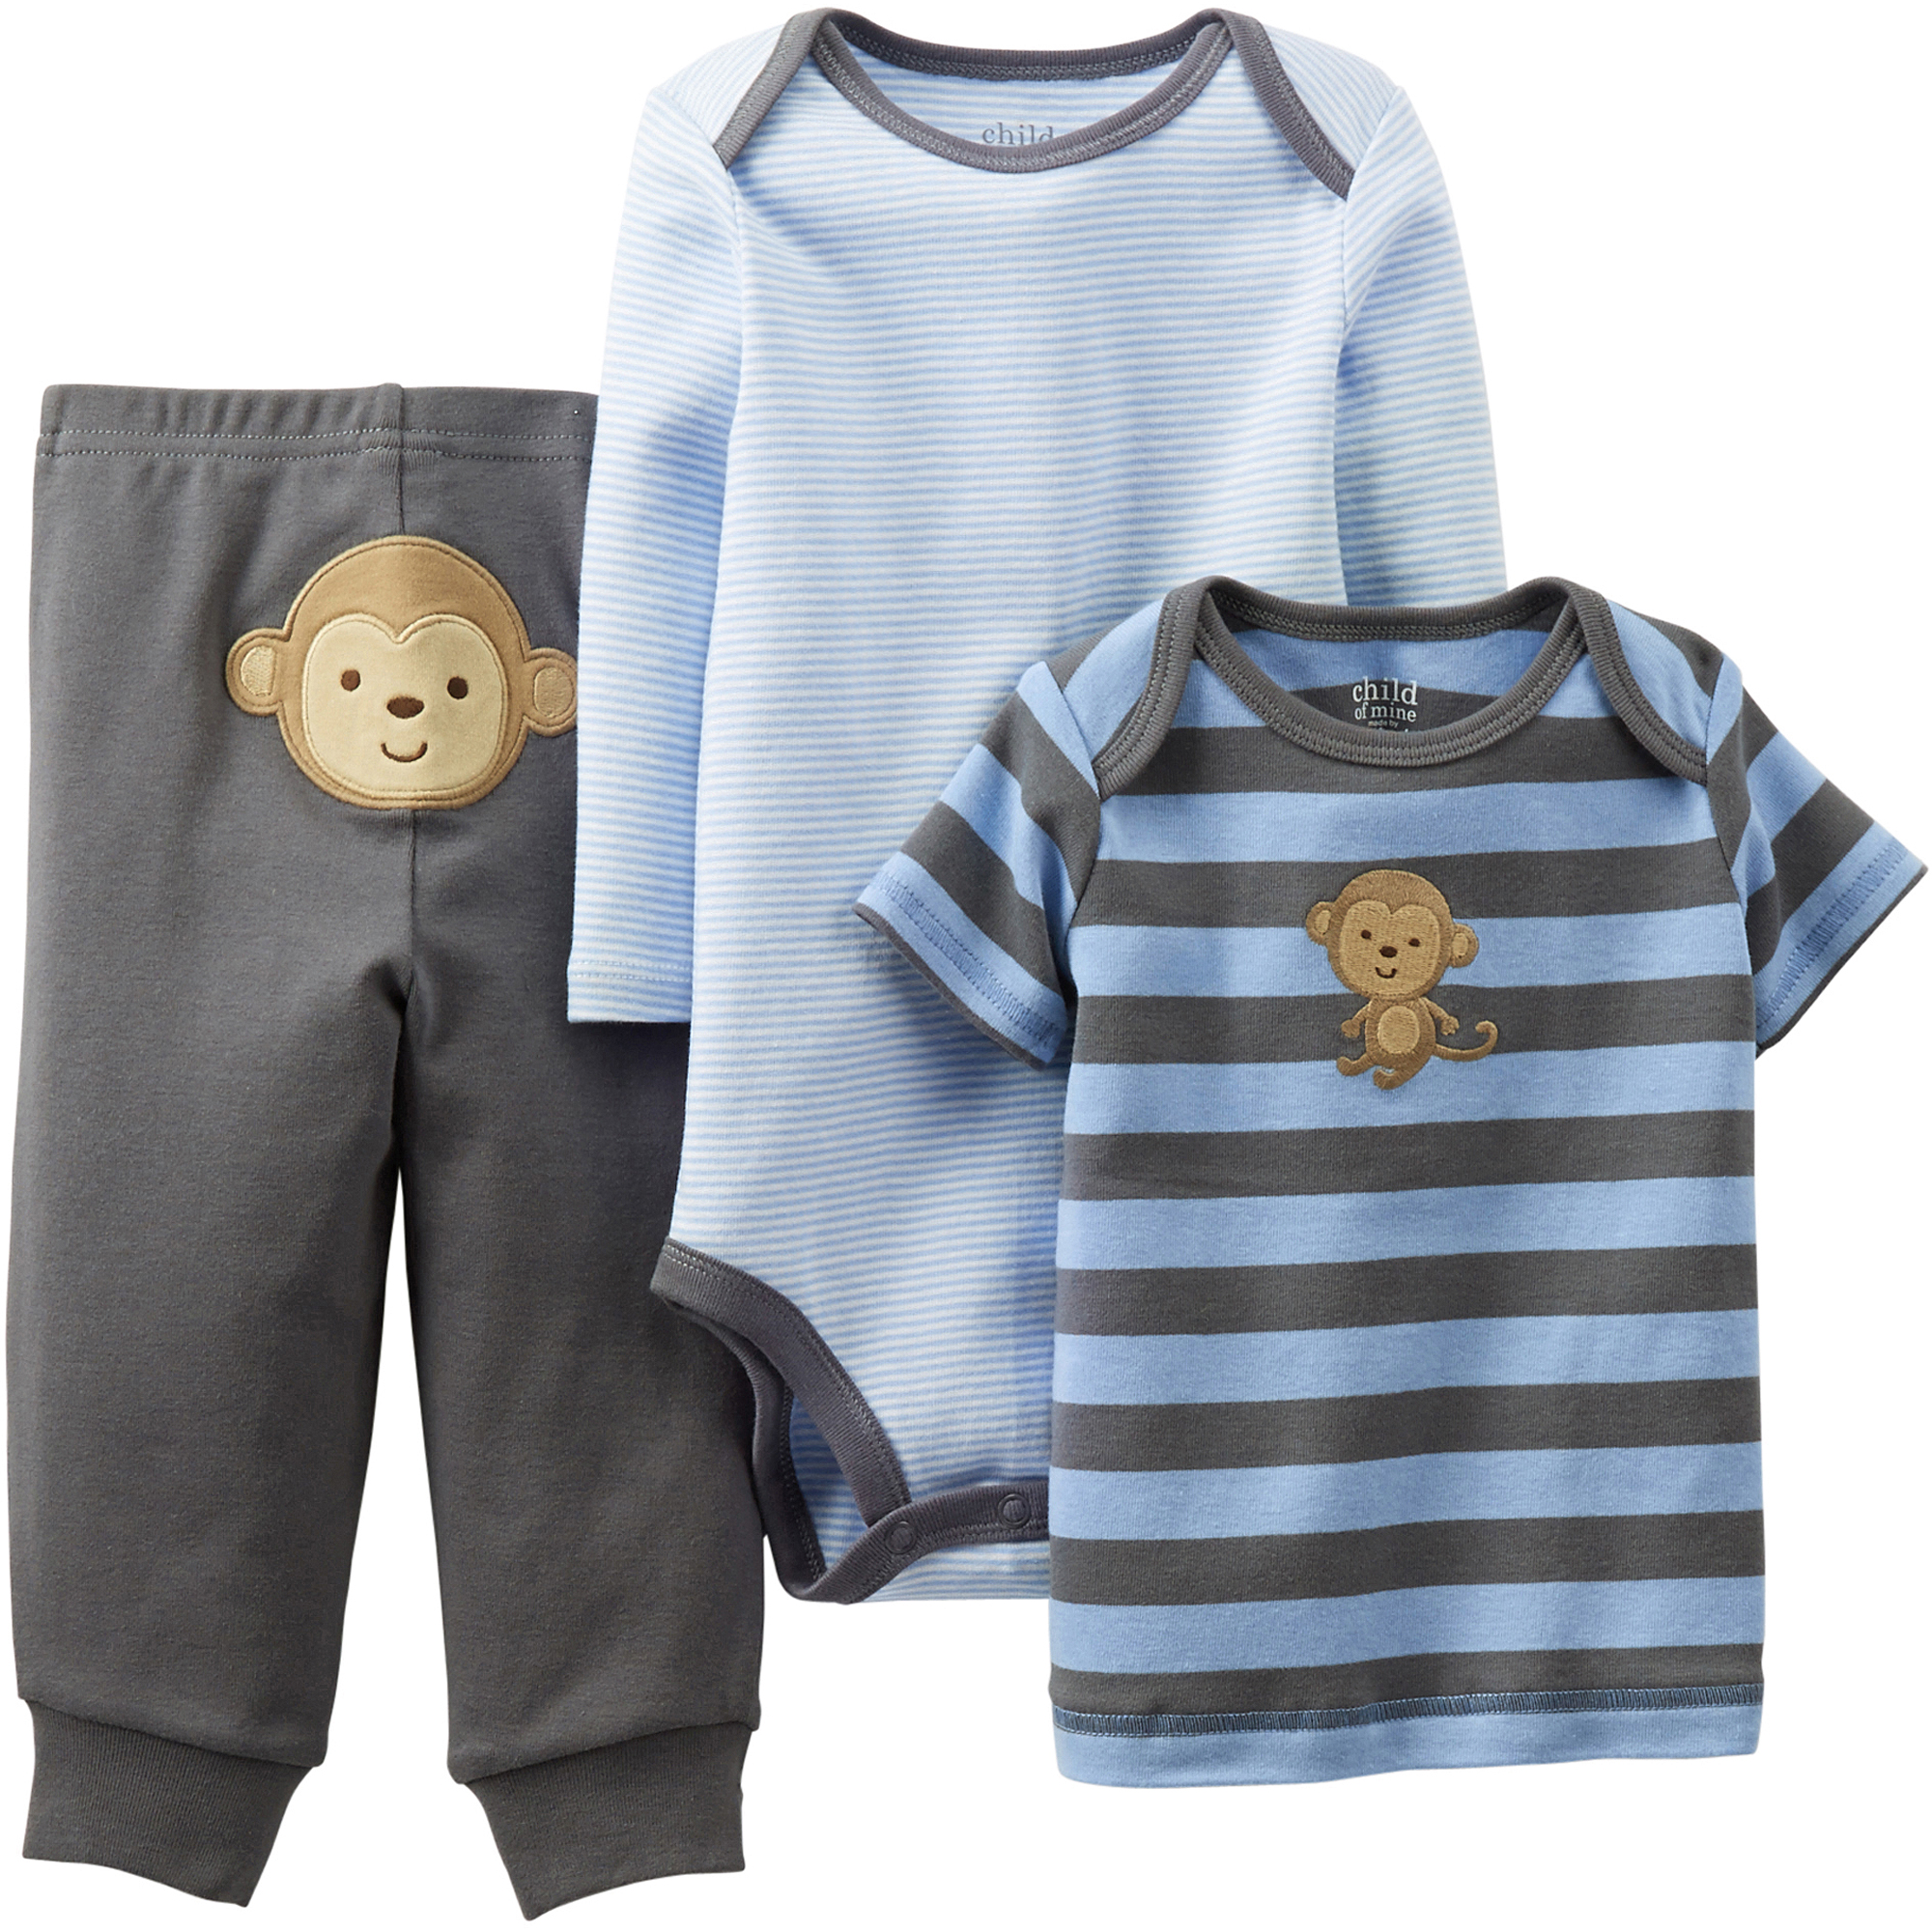 Child of Mine Newborn Boy Cotton Outfit 3-Piece Set - image 1 of 1